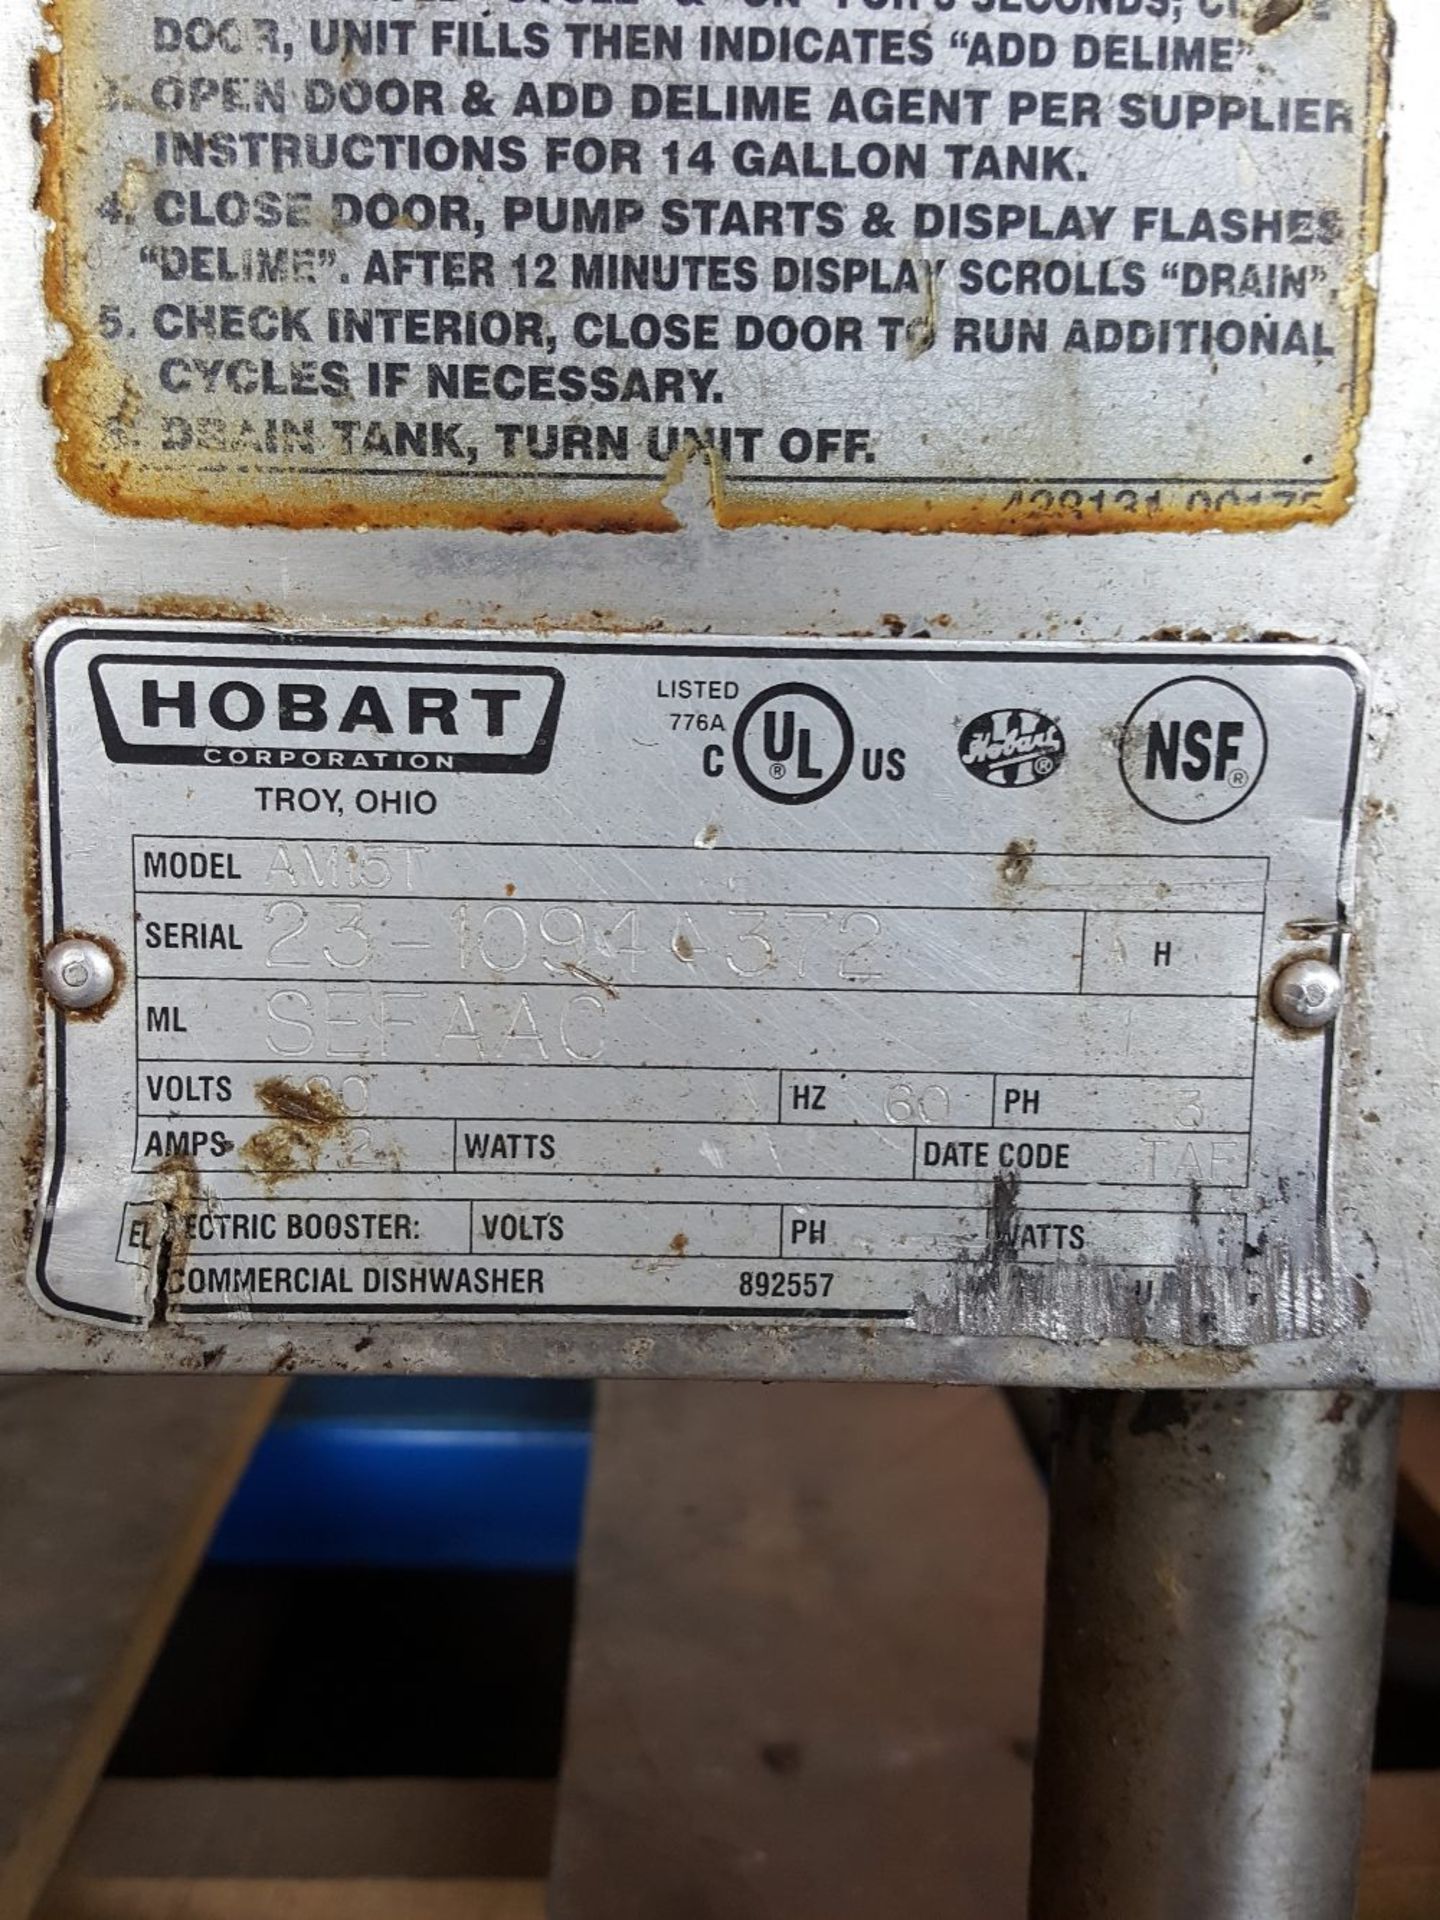 Hobart dishwasher Model AM15T Serial # 23-1094-372 480 volts 3 phase Date code TAF 27" wide x 27" - Image 4 of 8